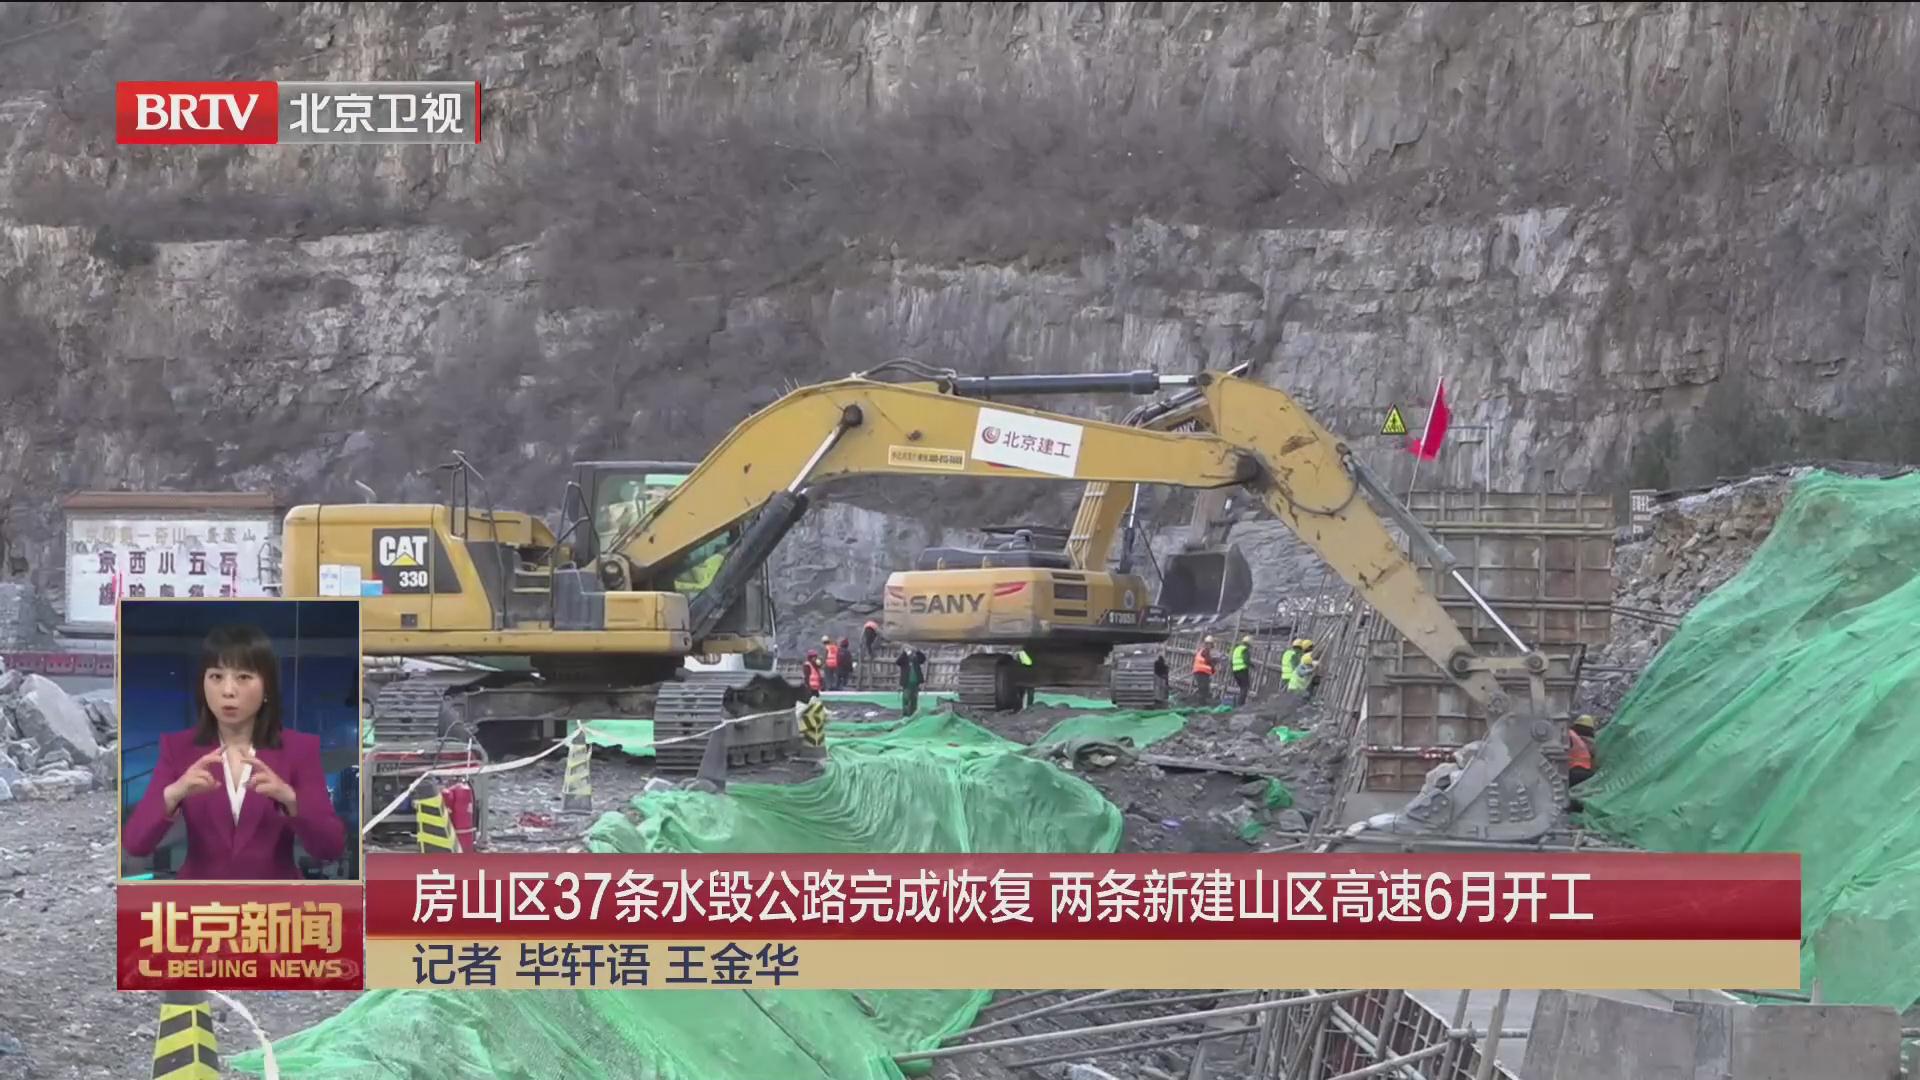 BRTV《北京新闻》——房山区37条水毁公路完成恢复  两条新建山区高速6月开工